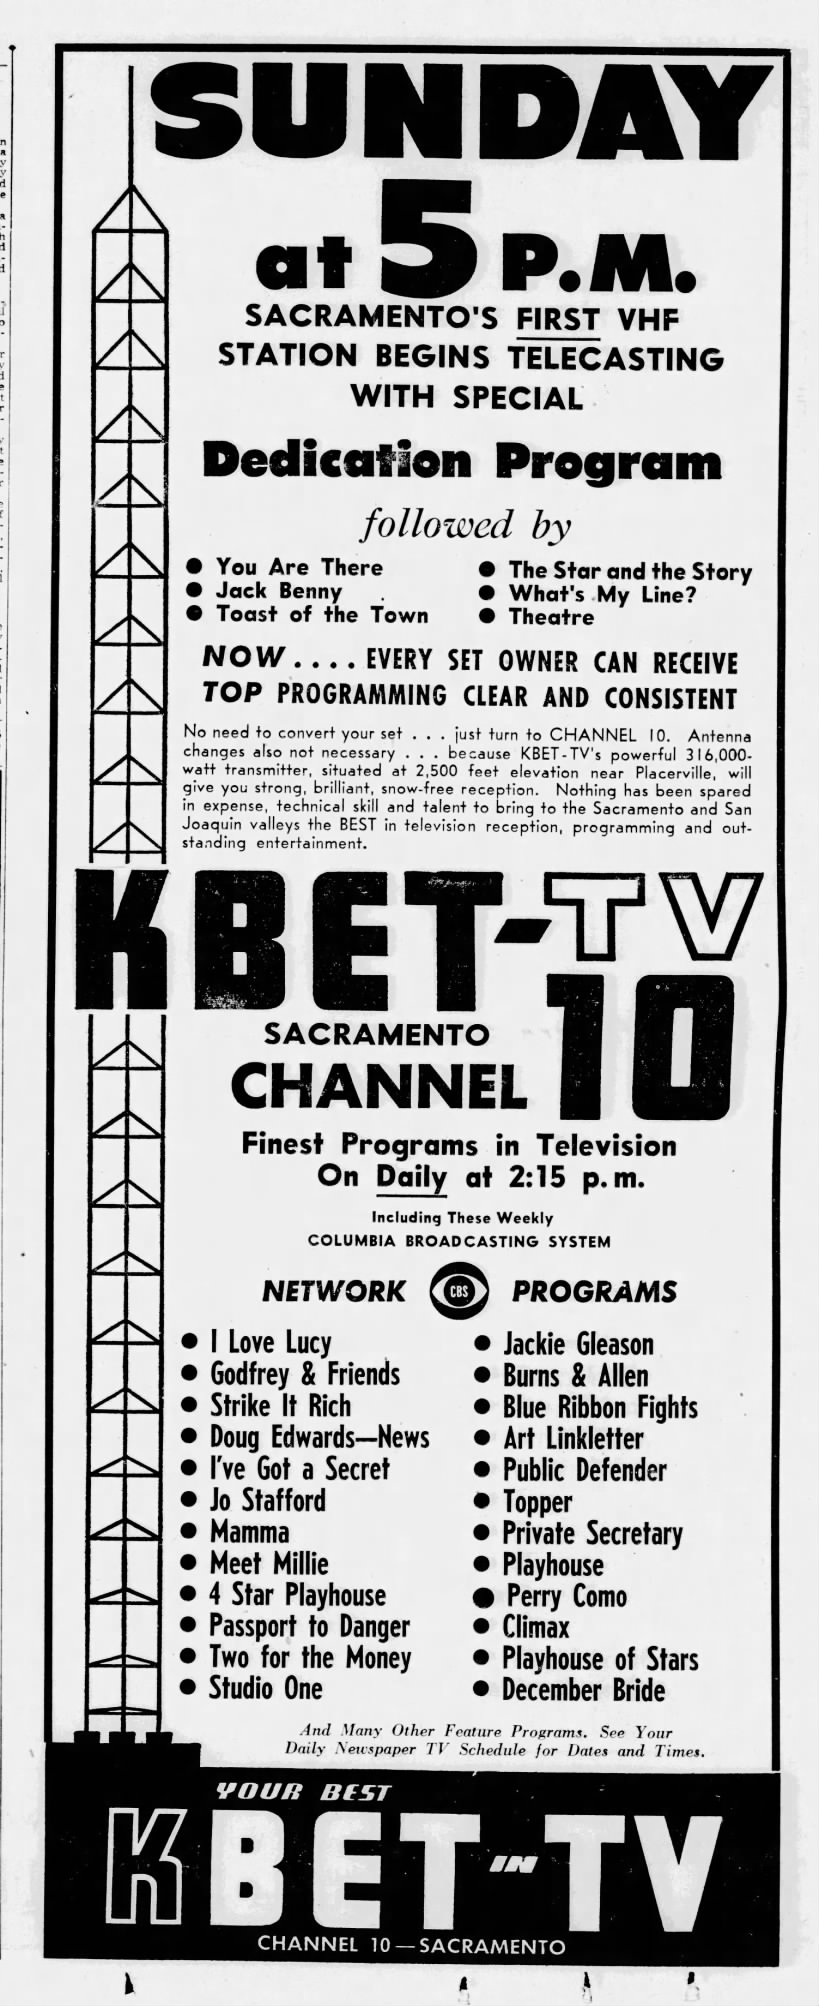 Sunday at 5 P.M.: Sacramento's First VHF Station Begins Telecasting